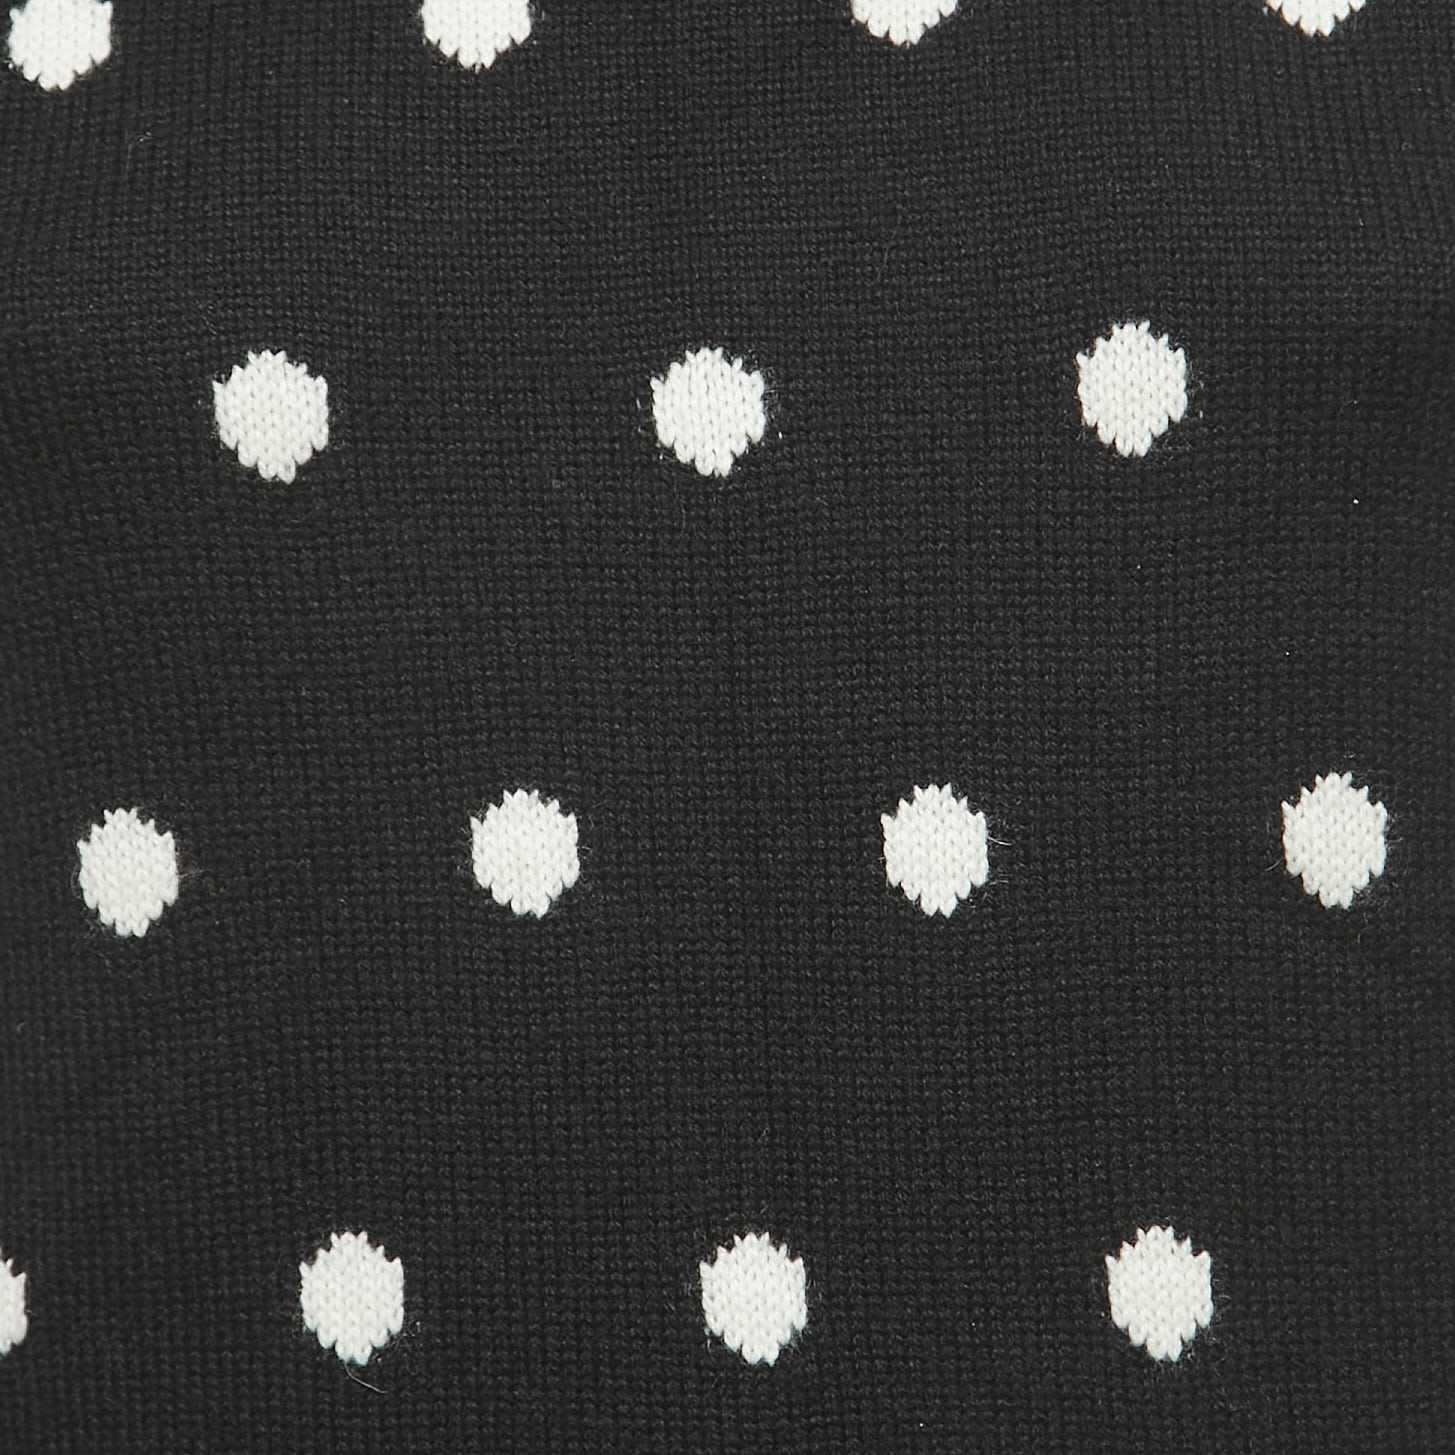 Chanel Black/White Polka Dot Cashmere Knit Top S